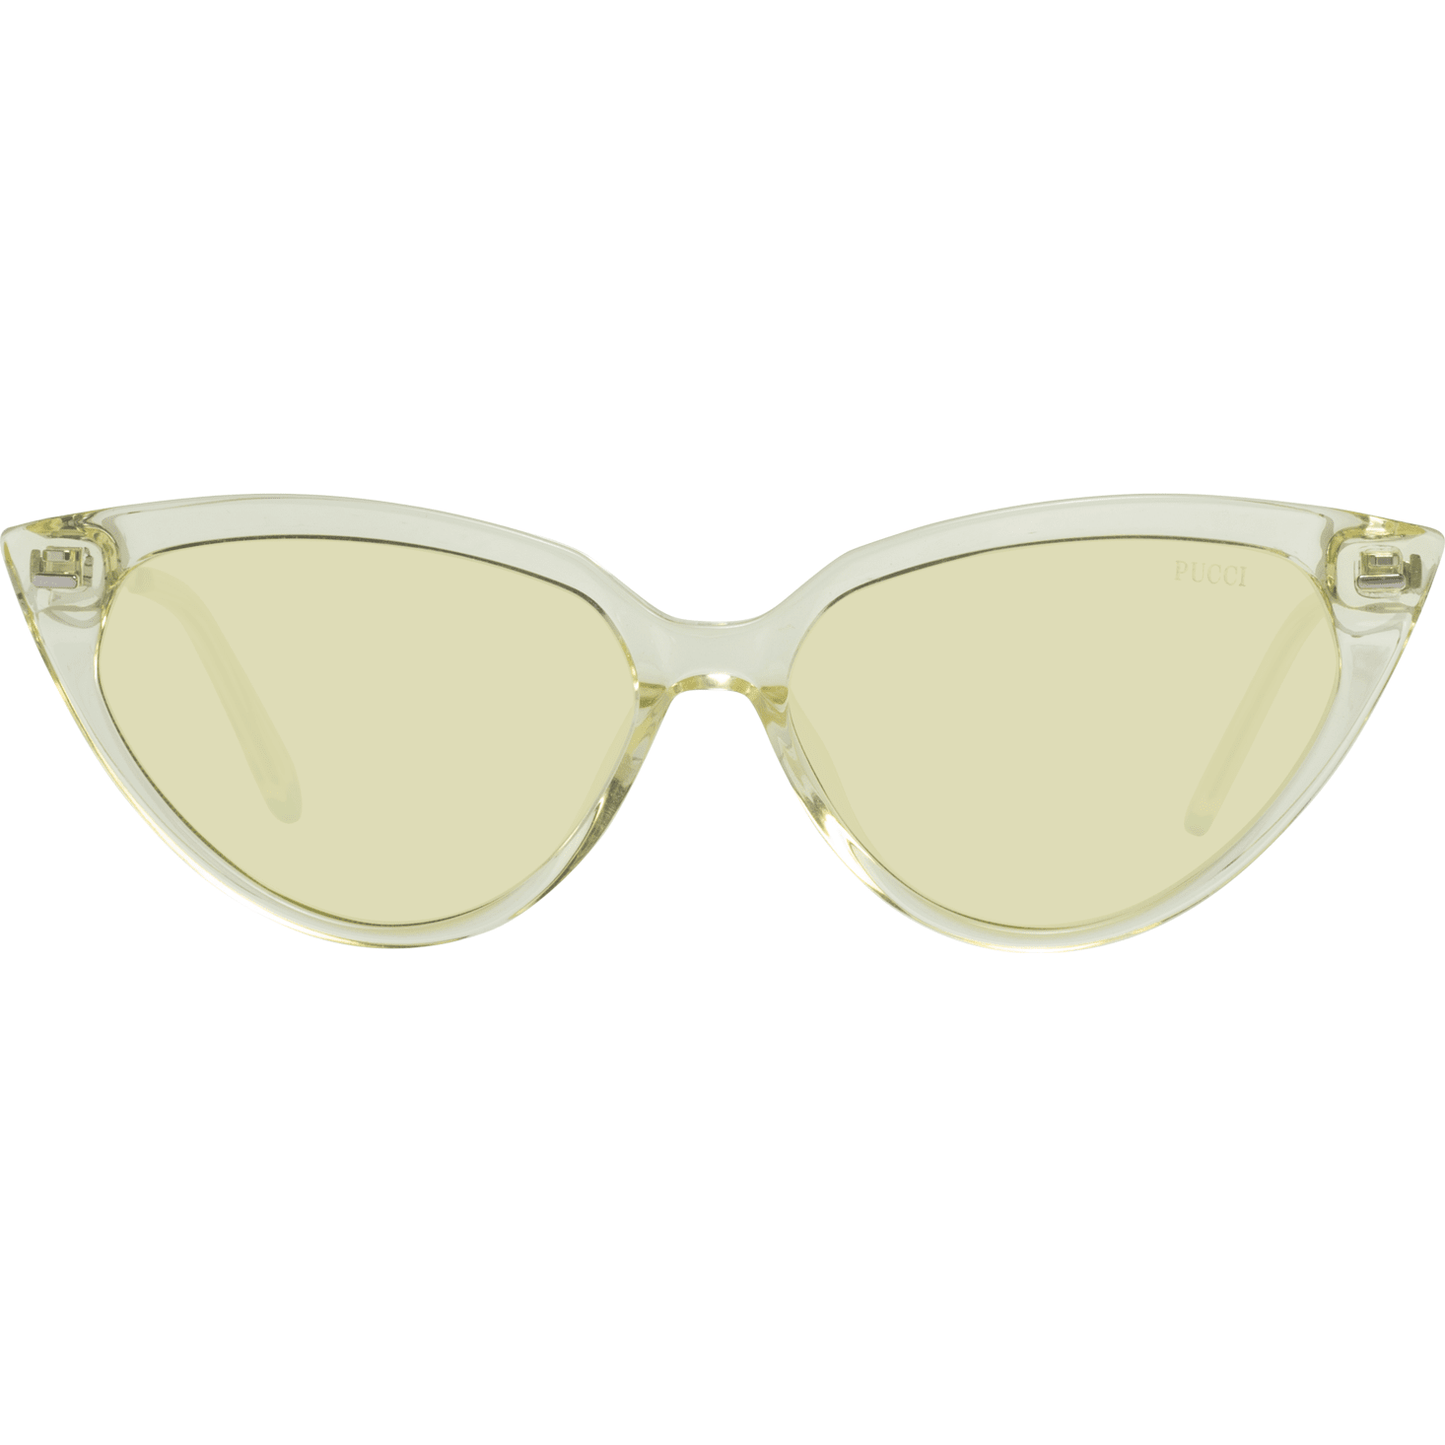 Emilio Pucci Sunny Cat Eye Elegance Shades yellow-women-sunglasses 889214129697_01-1c0edc7a-5ef.png